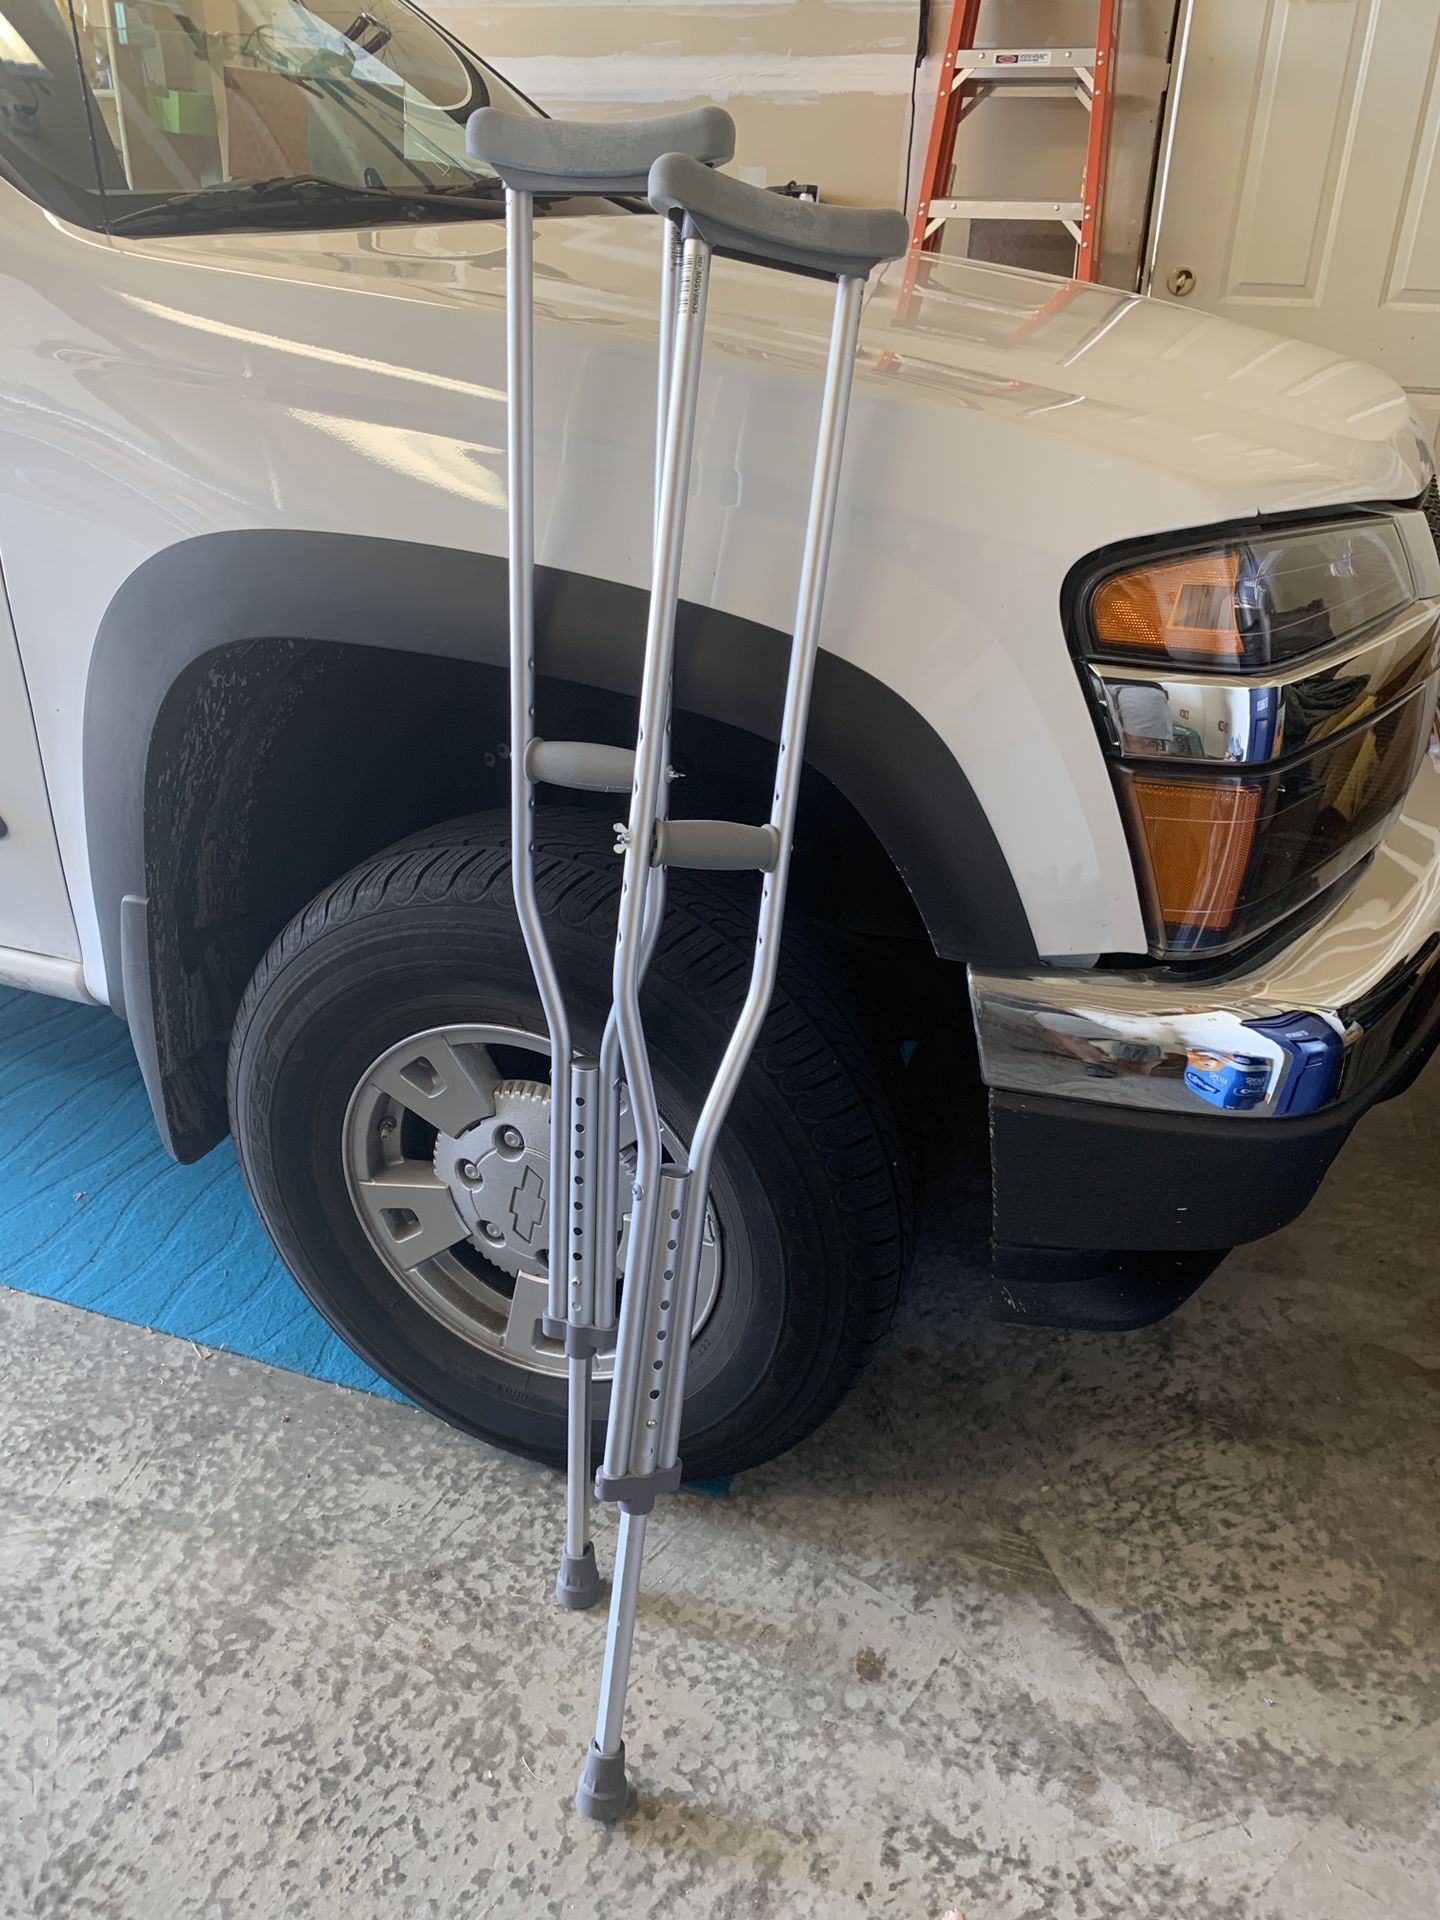 Adjustable metal crutches